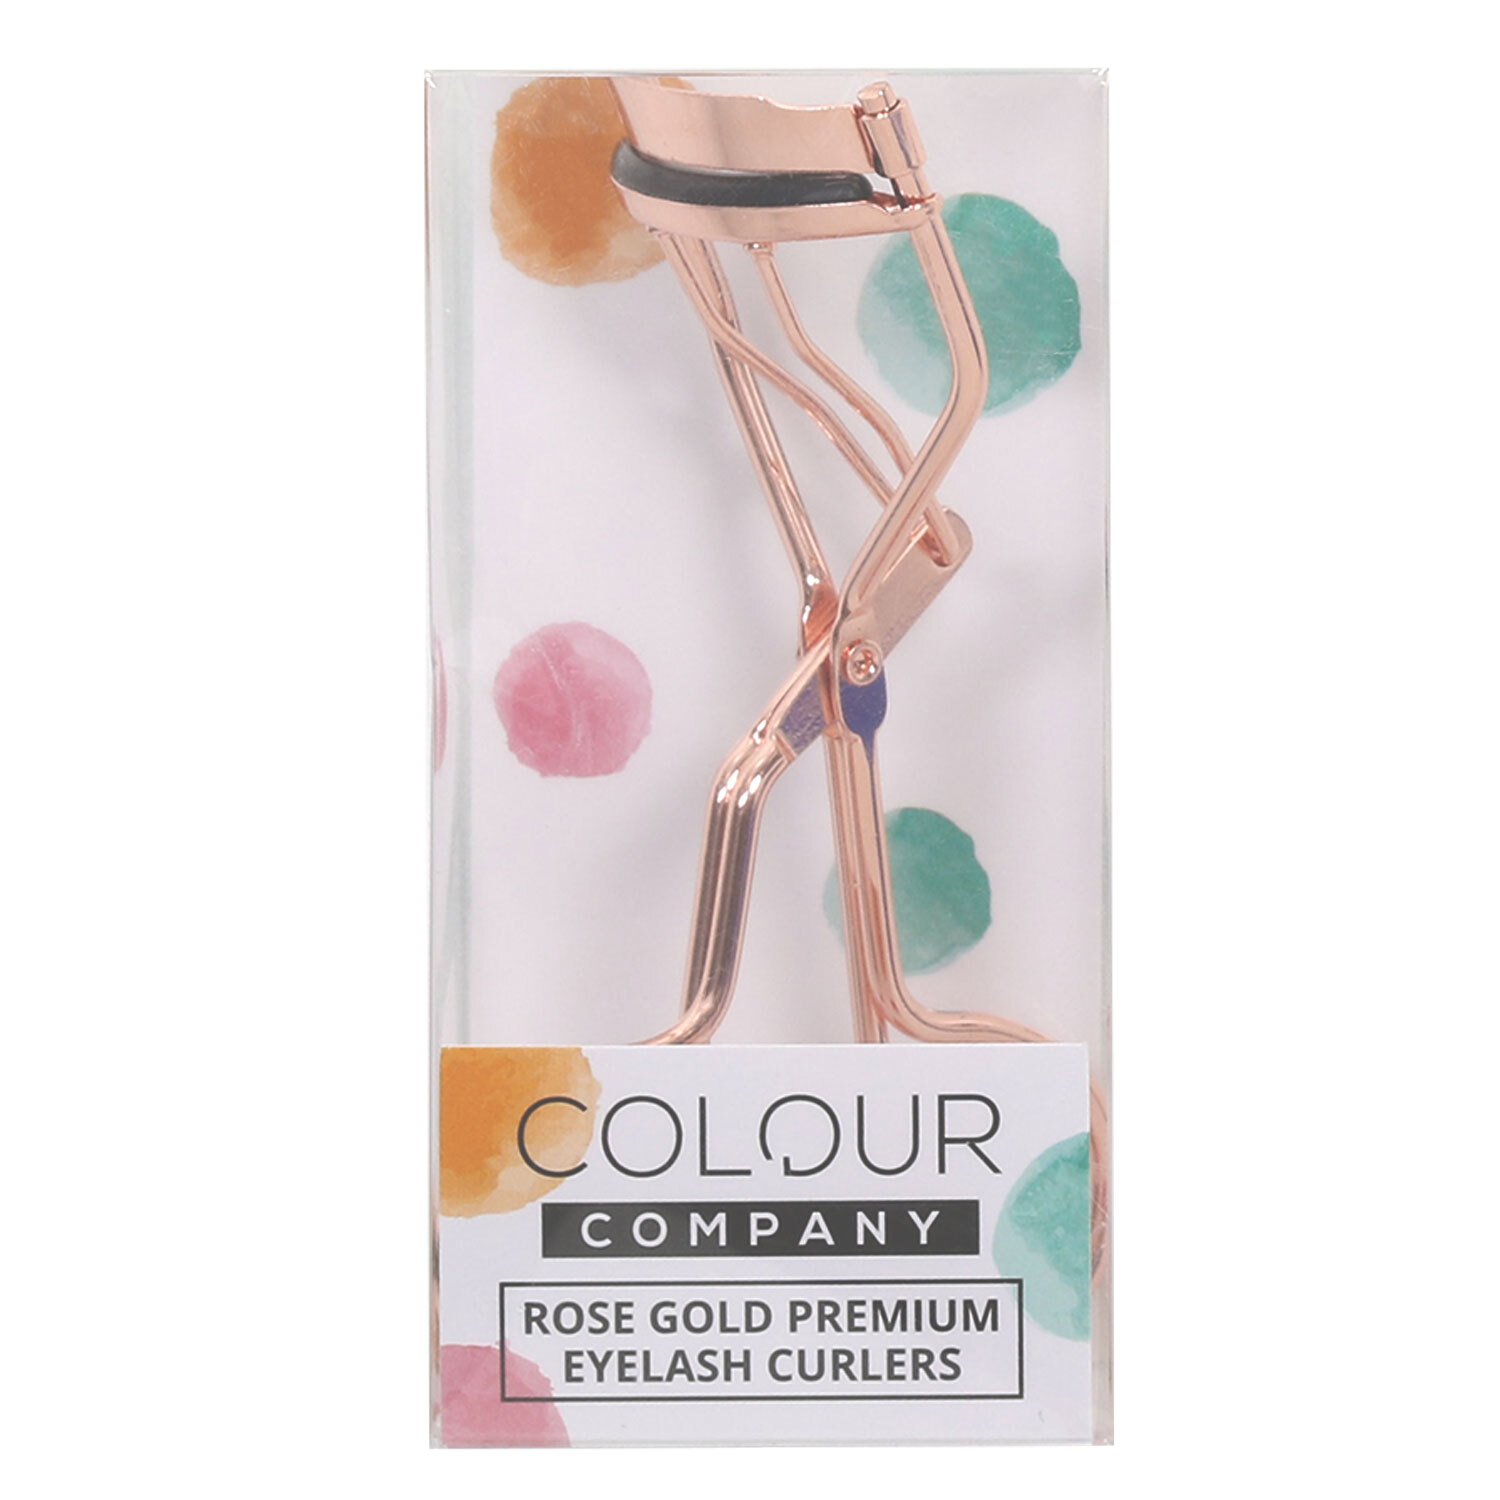 Rose Gold Premium Eyelash Curlers Image